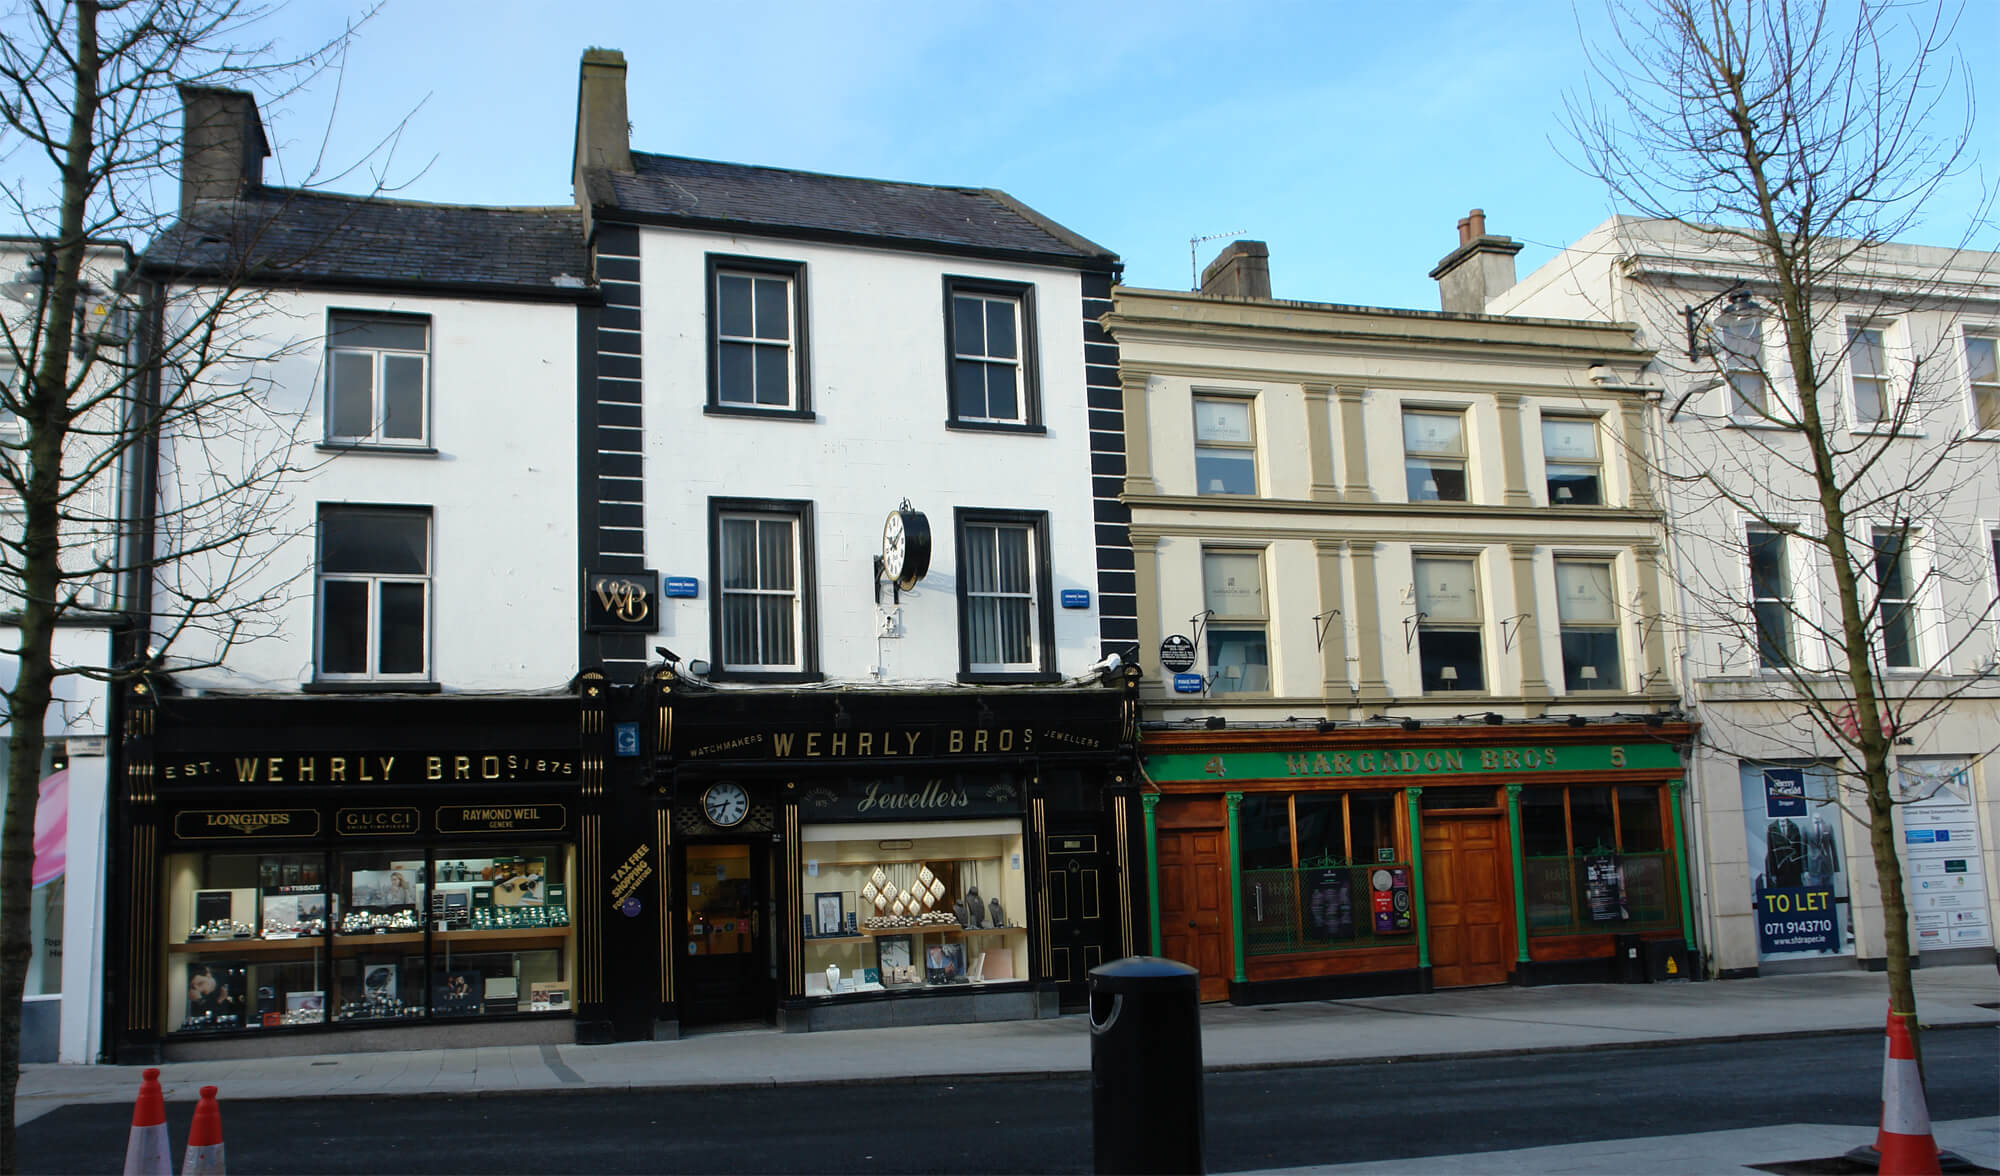 Major Historic Towns Initiative for Sligo